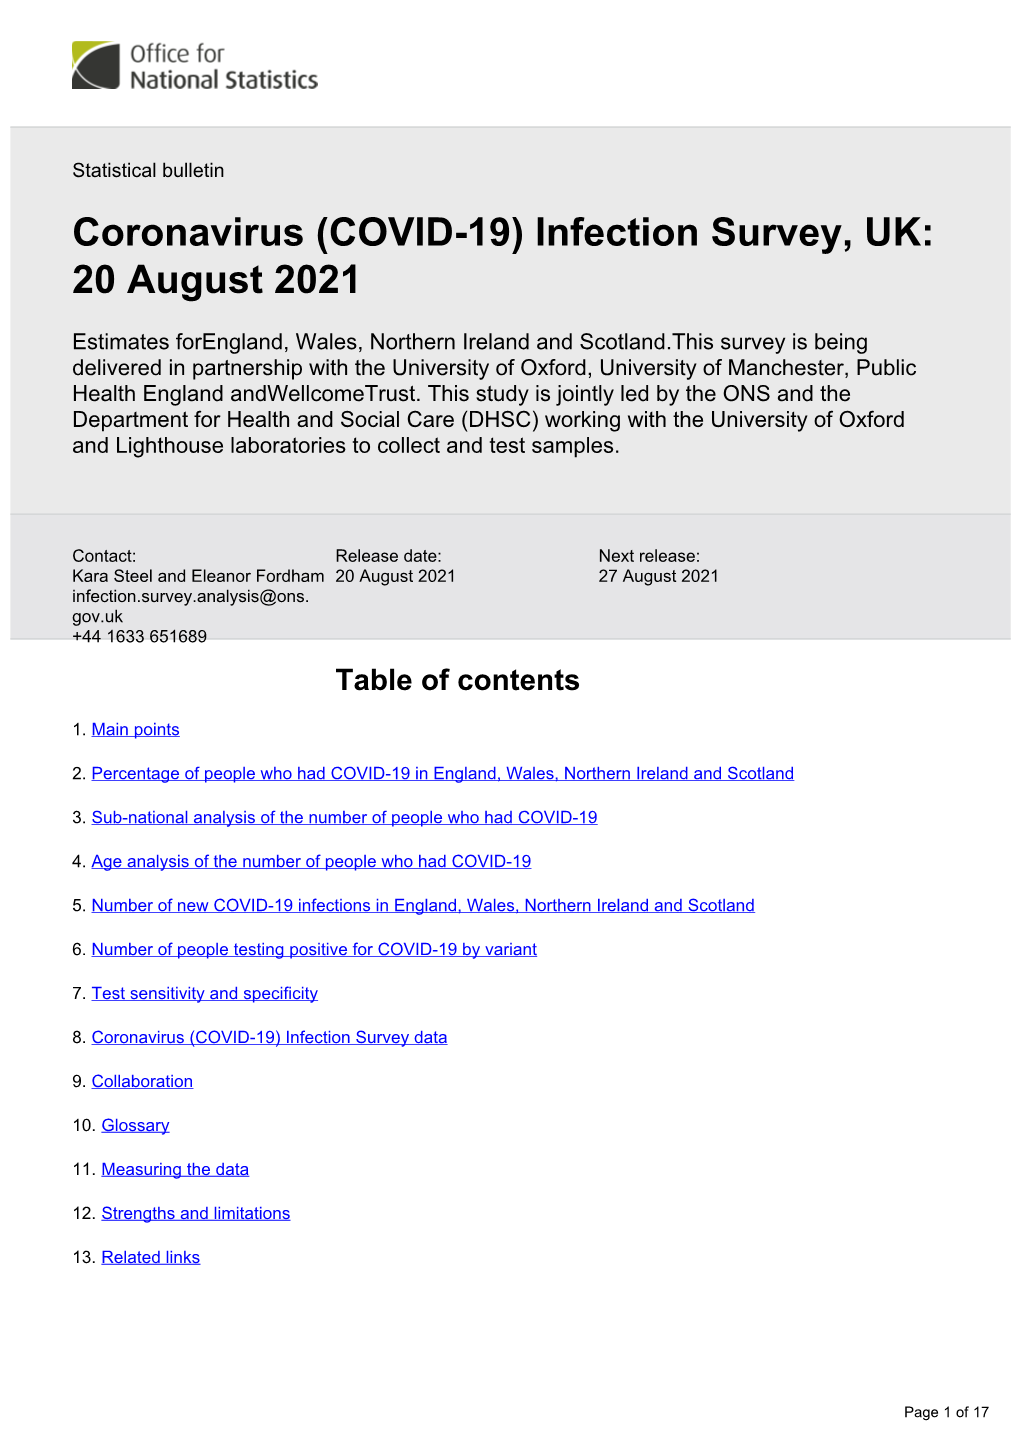 Coronavirus (COVID-19) Infection Survey, UK: 20 August 2021